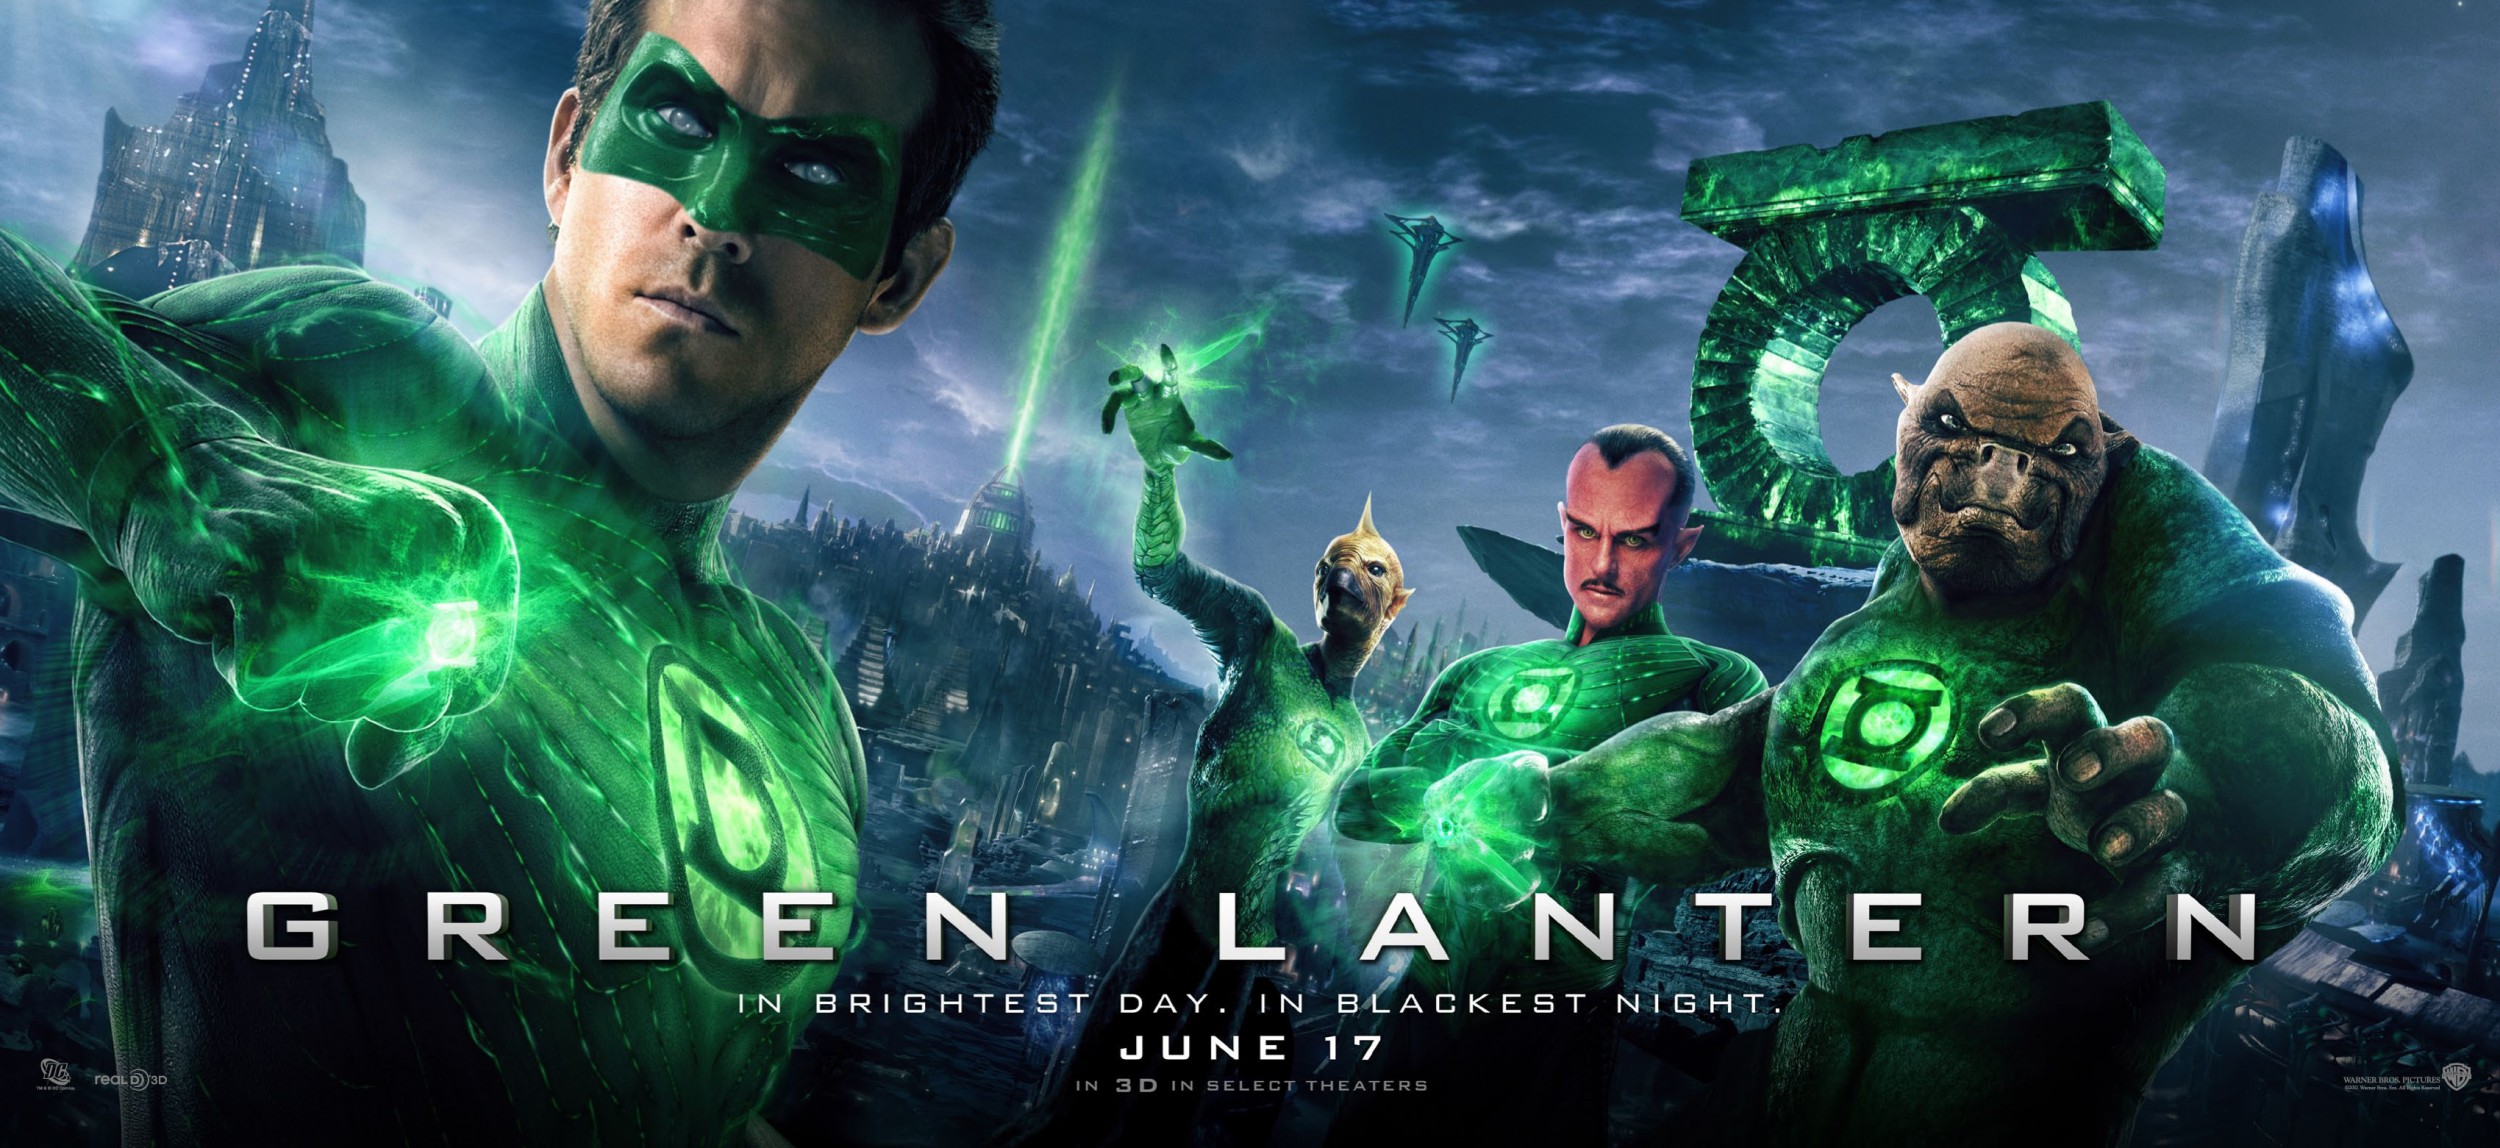 Mega Sized Movie Poster Image for Green Lantern (#20 of 20)